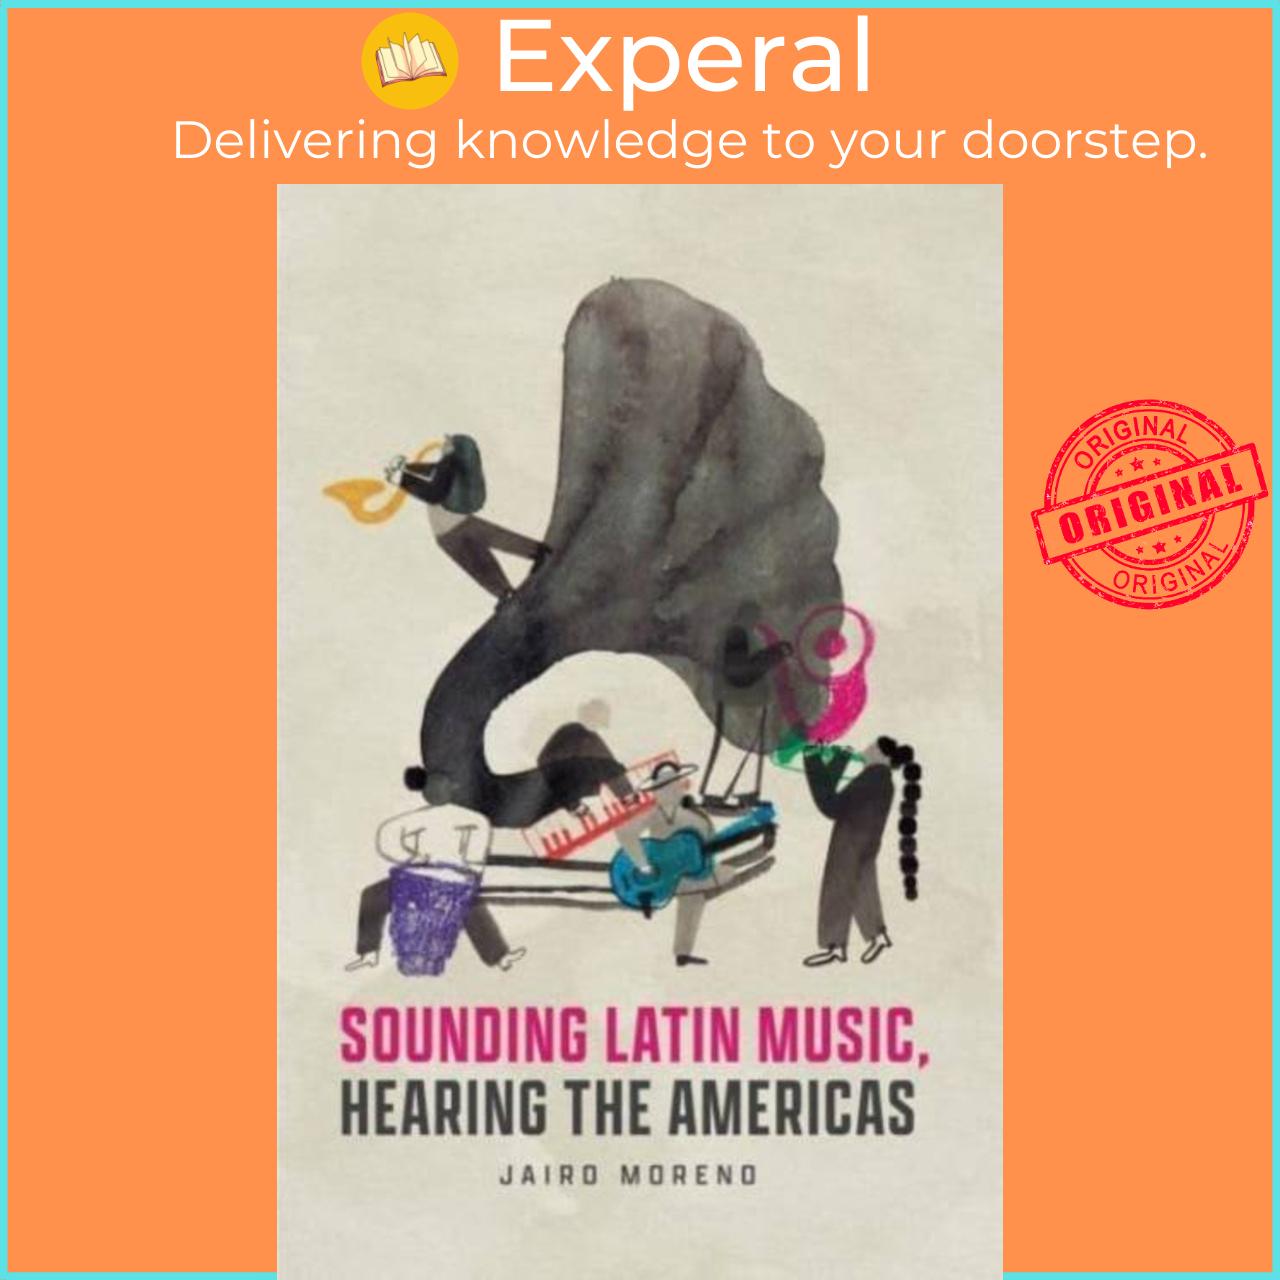 Sách - Sounding Latin Music, Hearing the Americas by Jairo Moreno (UK edition, paperback)